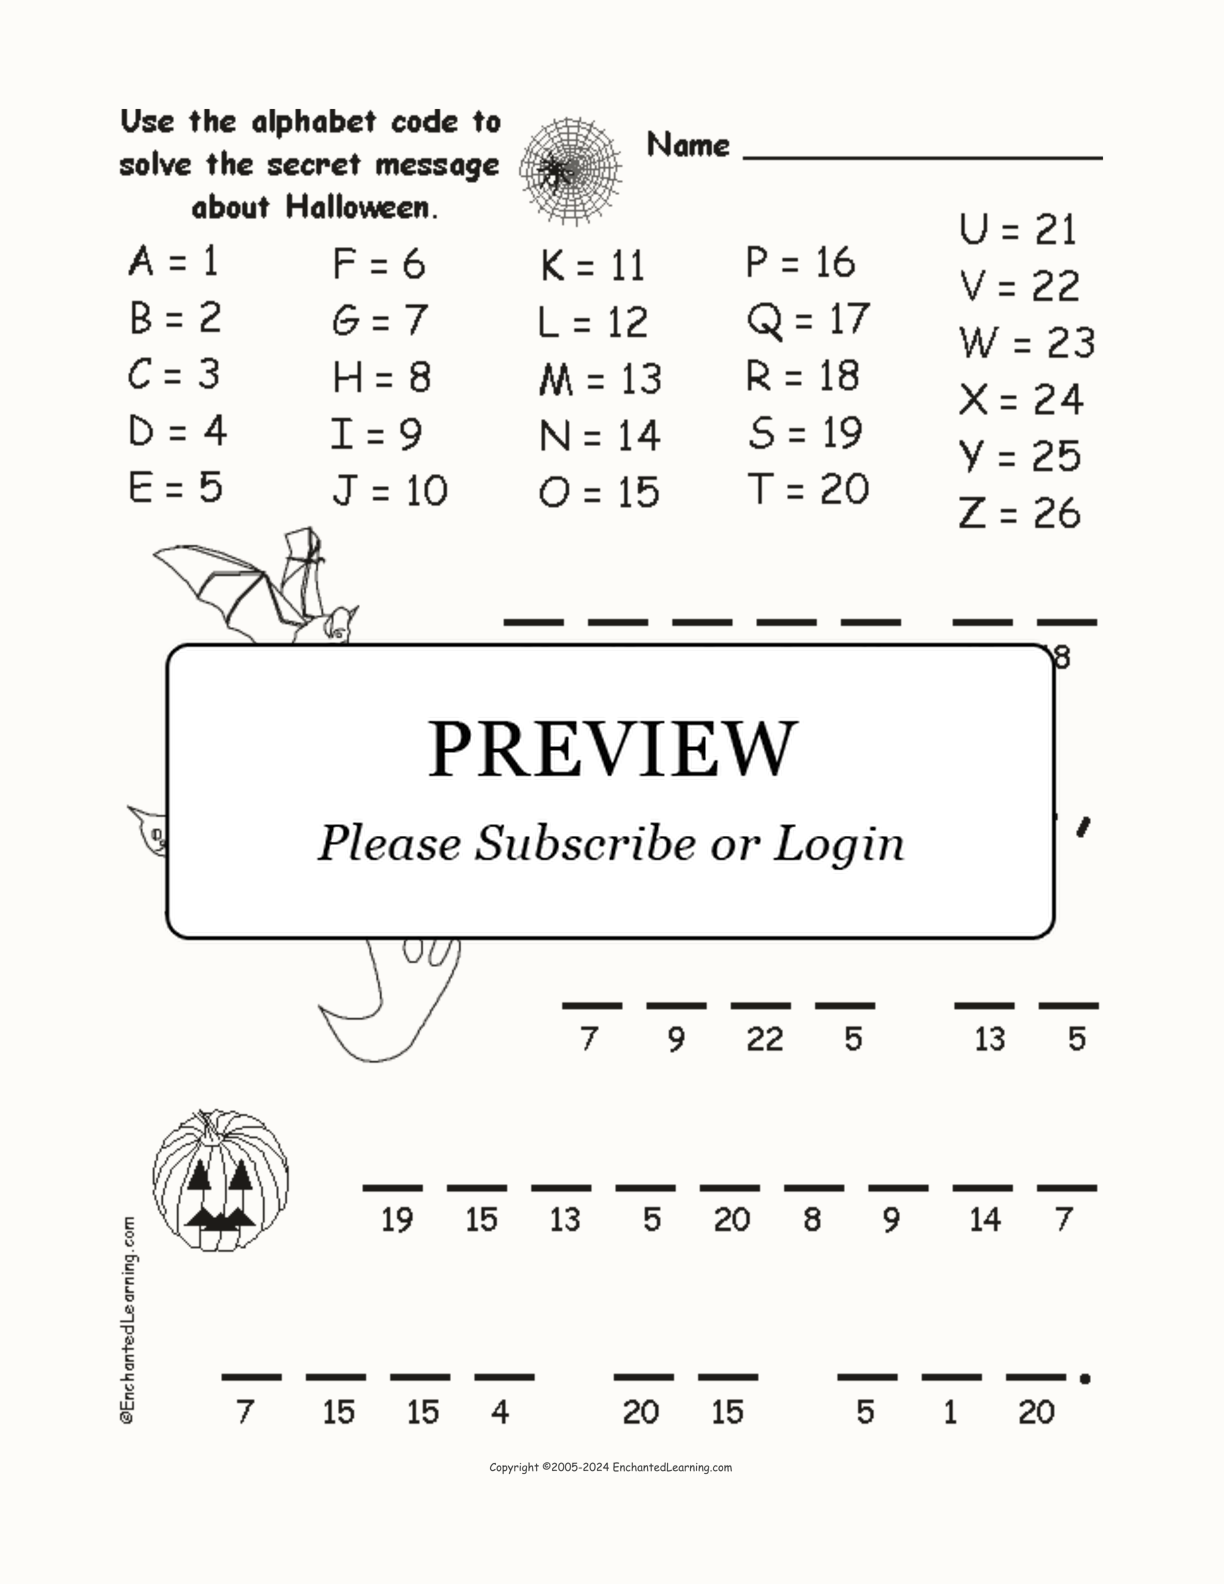 Halloween Alphabet Code interactive worksheet page 1